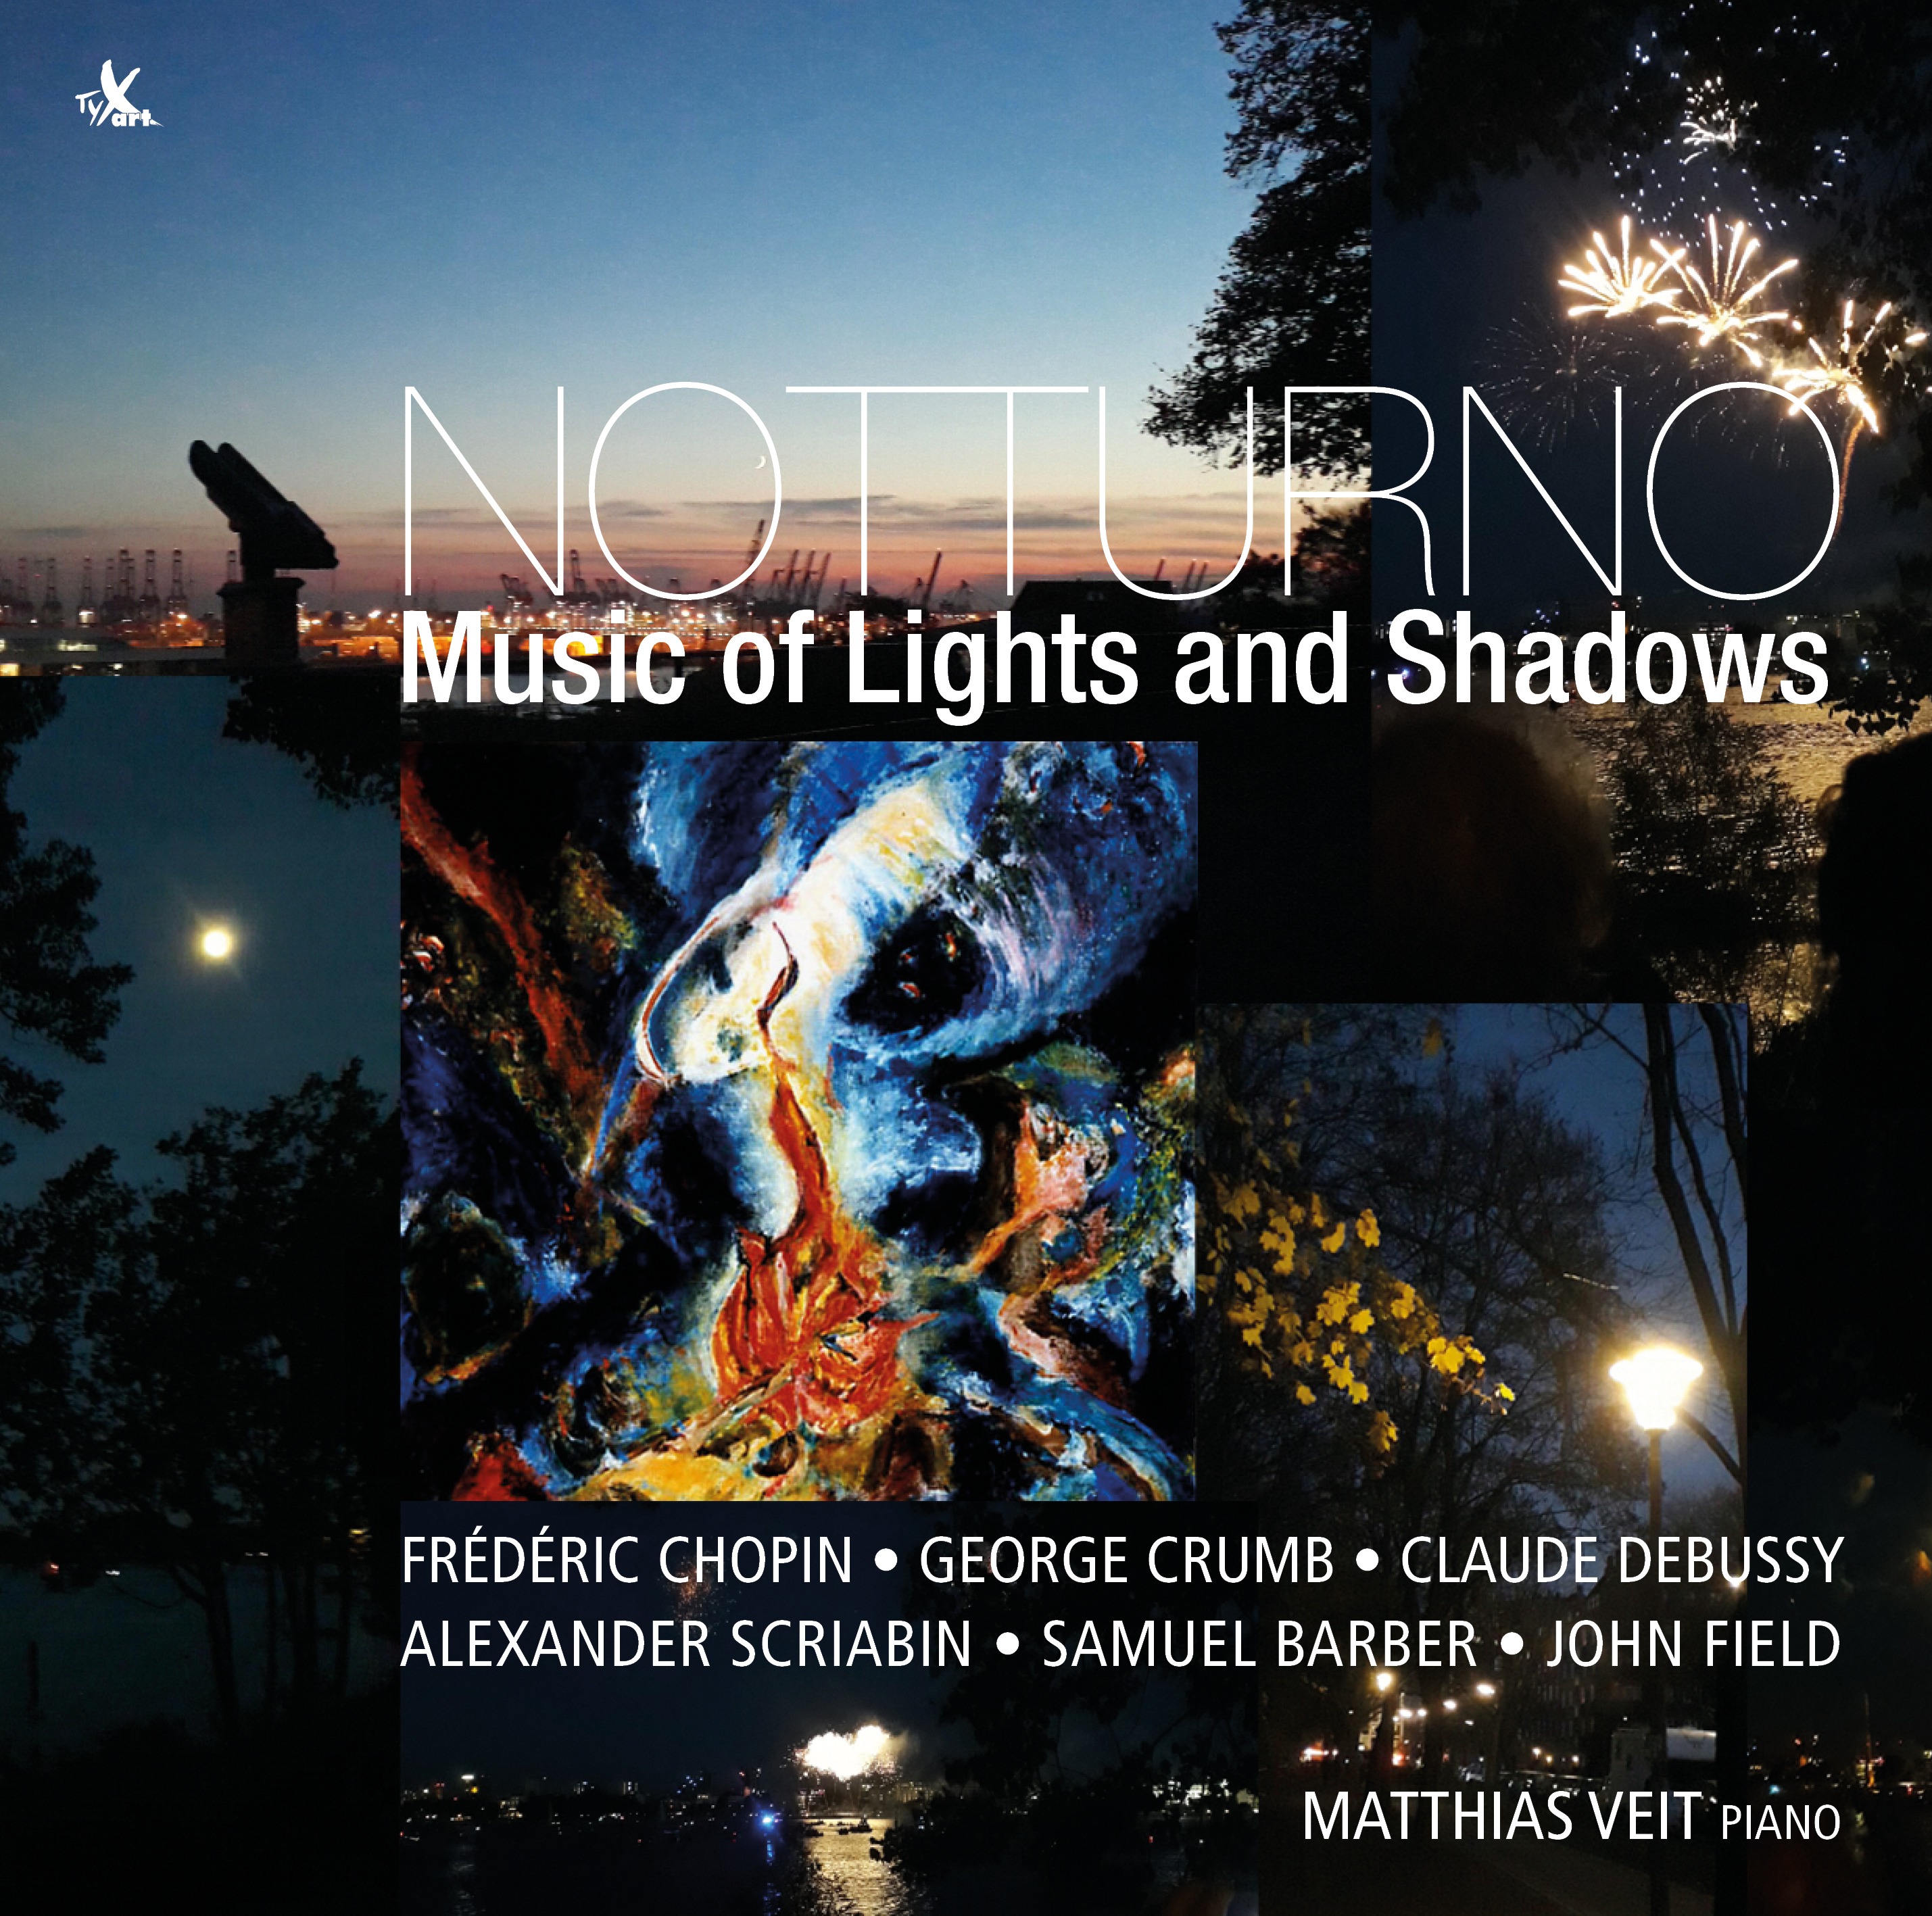 Notturno – Music of Lights and Shadows - Matthias Veit, Piano